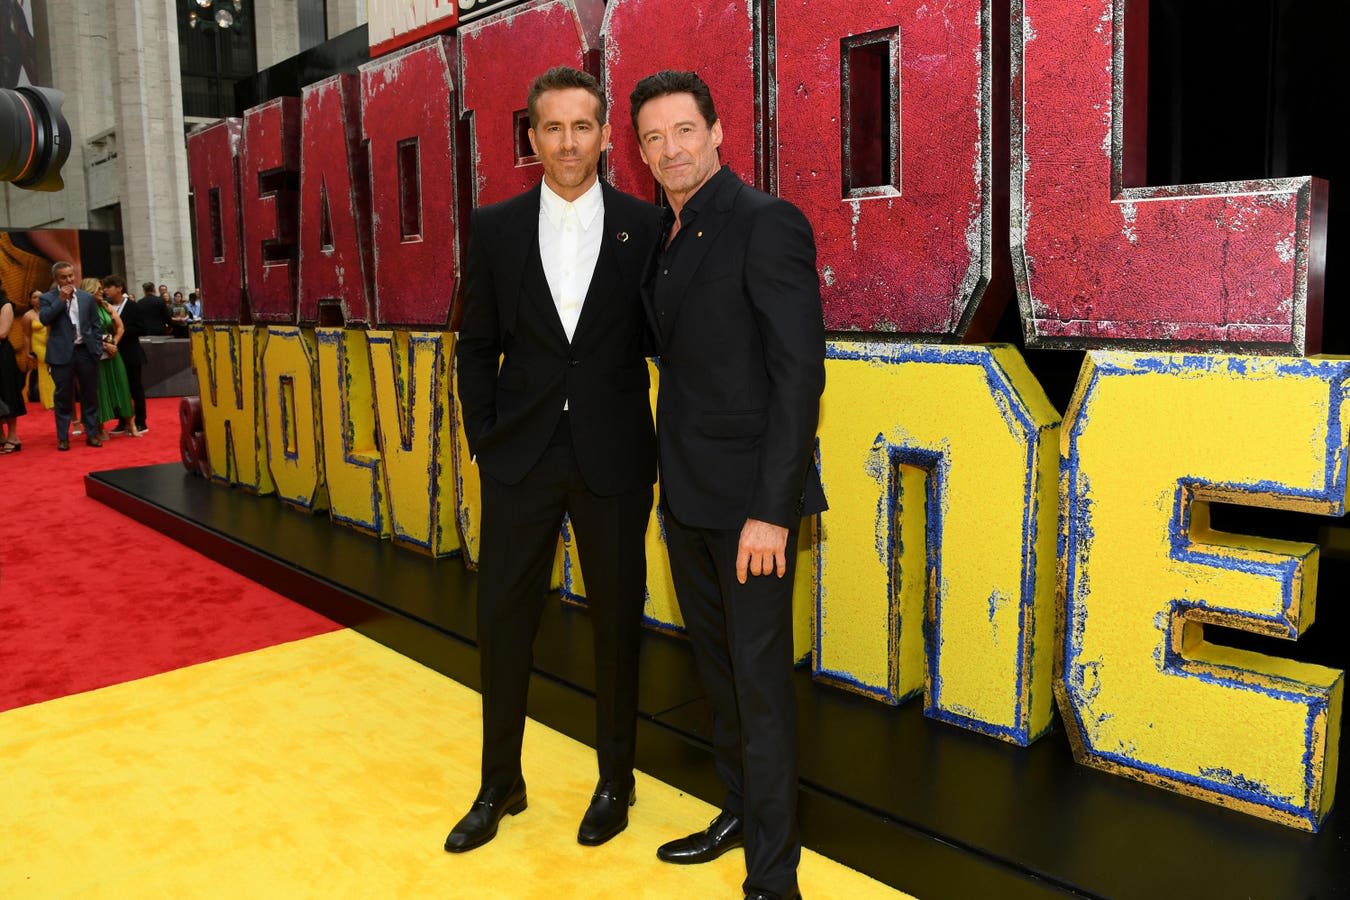 ‘Deadpool & Wolverine’ Shatters Box Office Records, Eyes $400 Million Global Opening Weekend